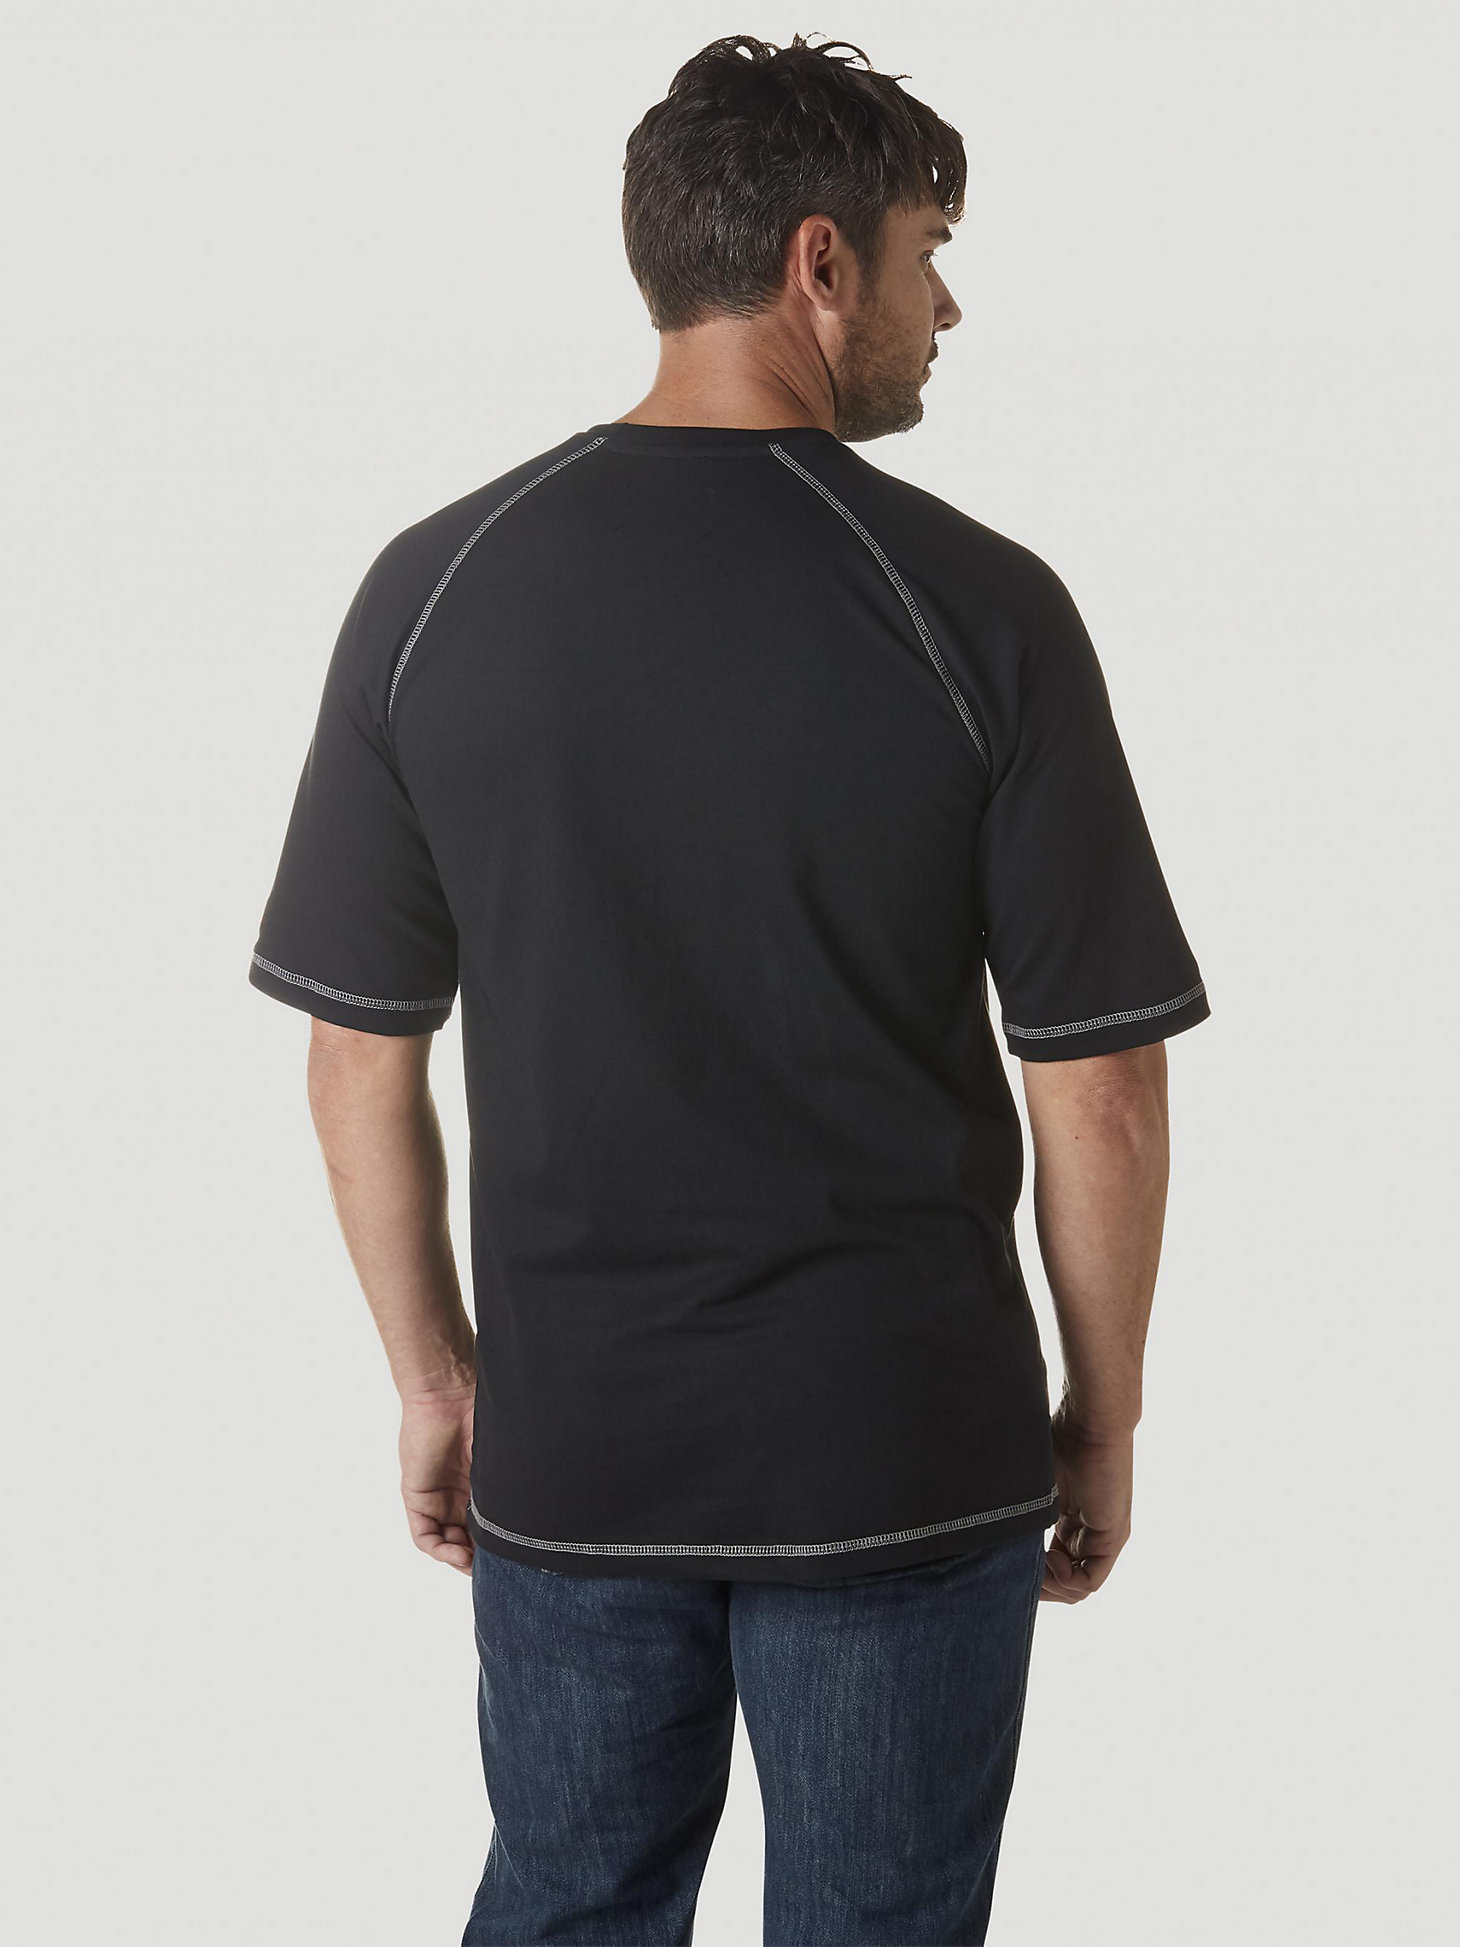 Wrangler® FR Flame Resistant Short Sleeve Base Layer T-Shirt in Black alternative view 1